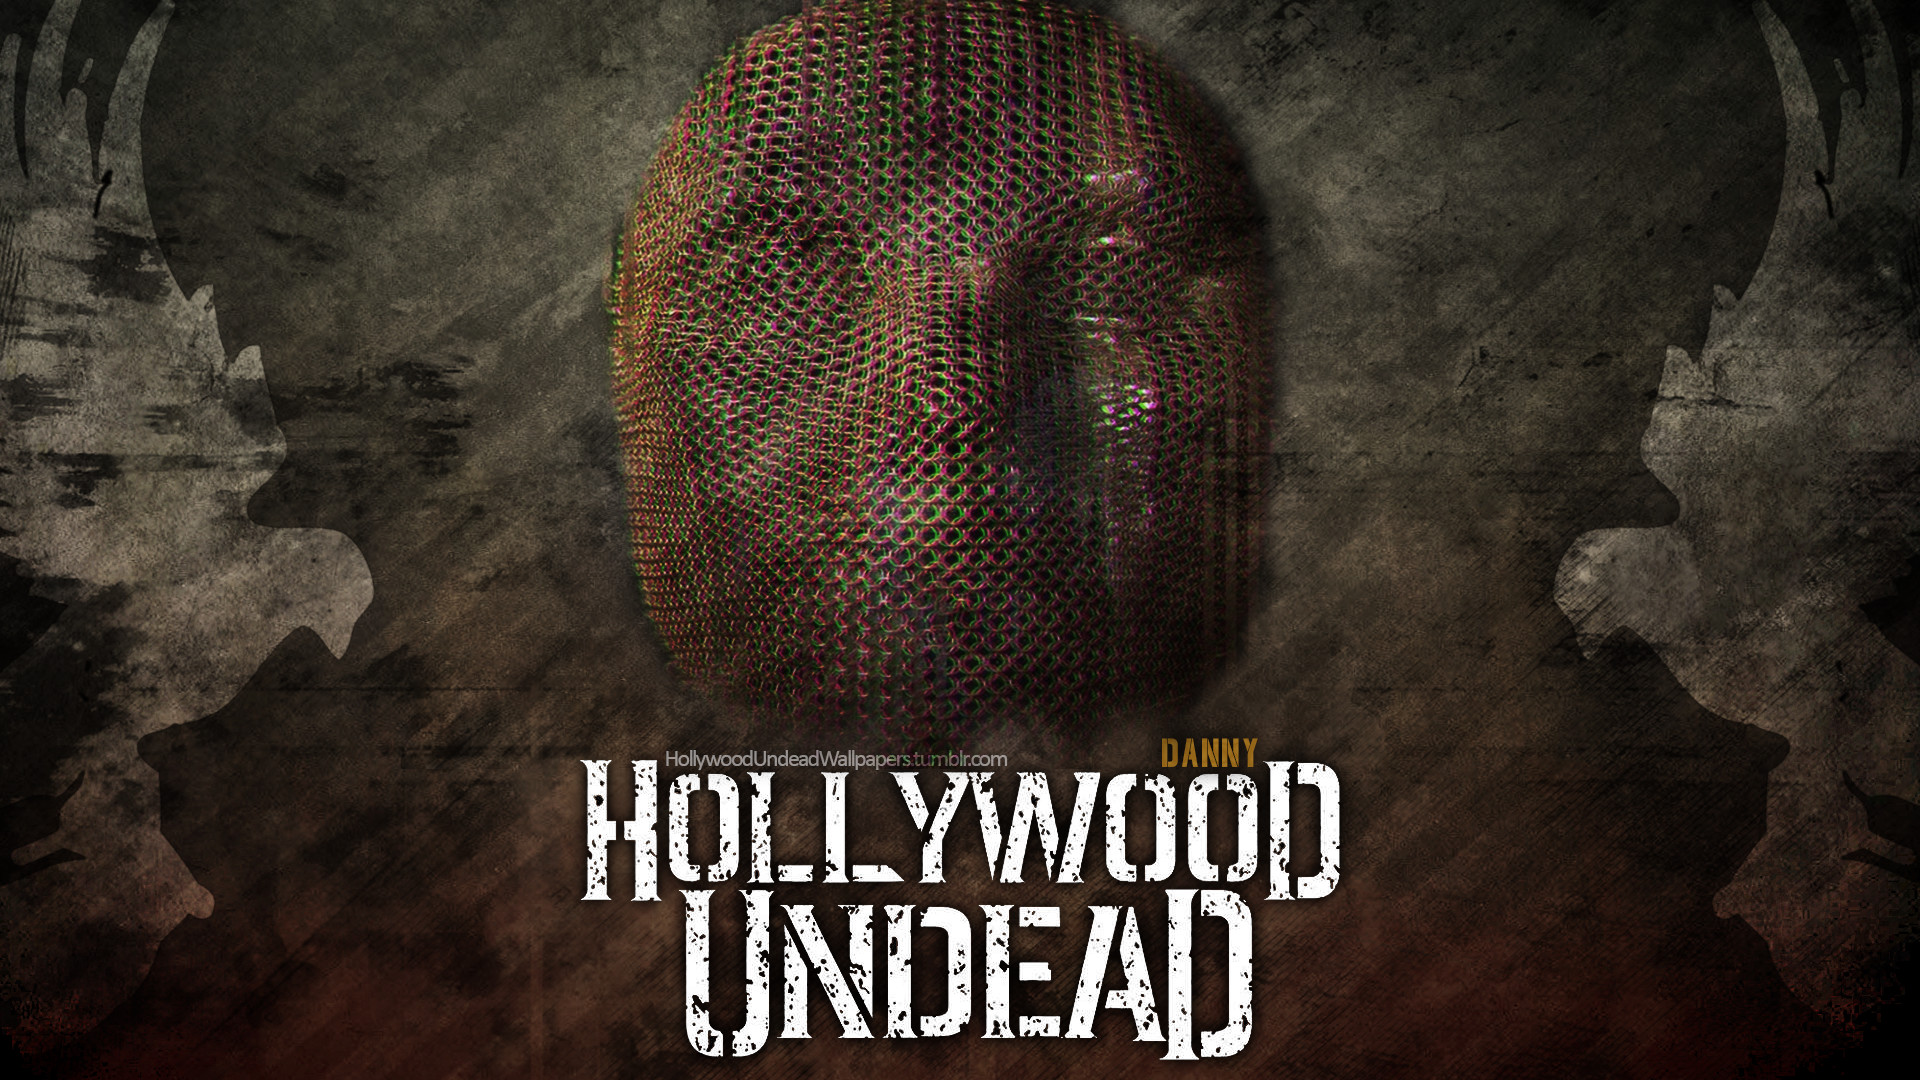 1920x1080 ... Hollywood Undead - Danny Wallpaper by emirulug